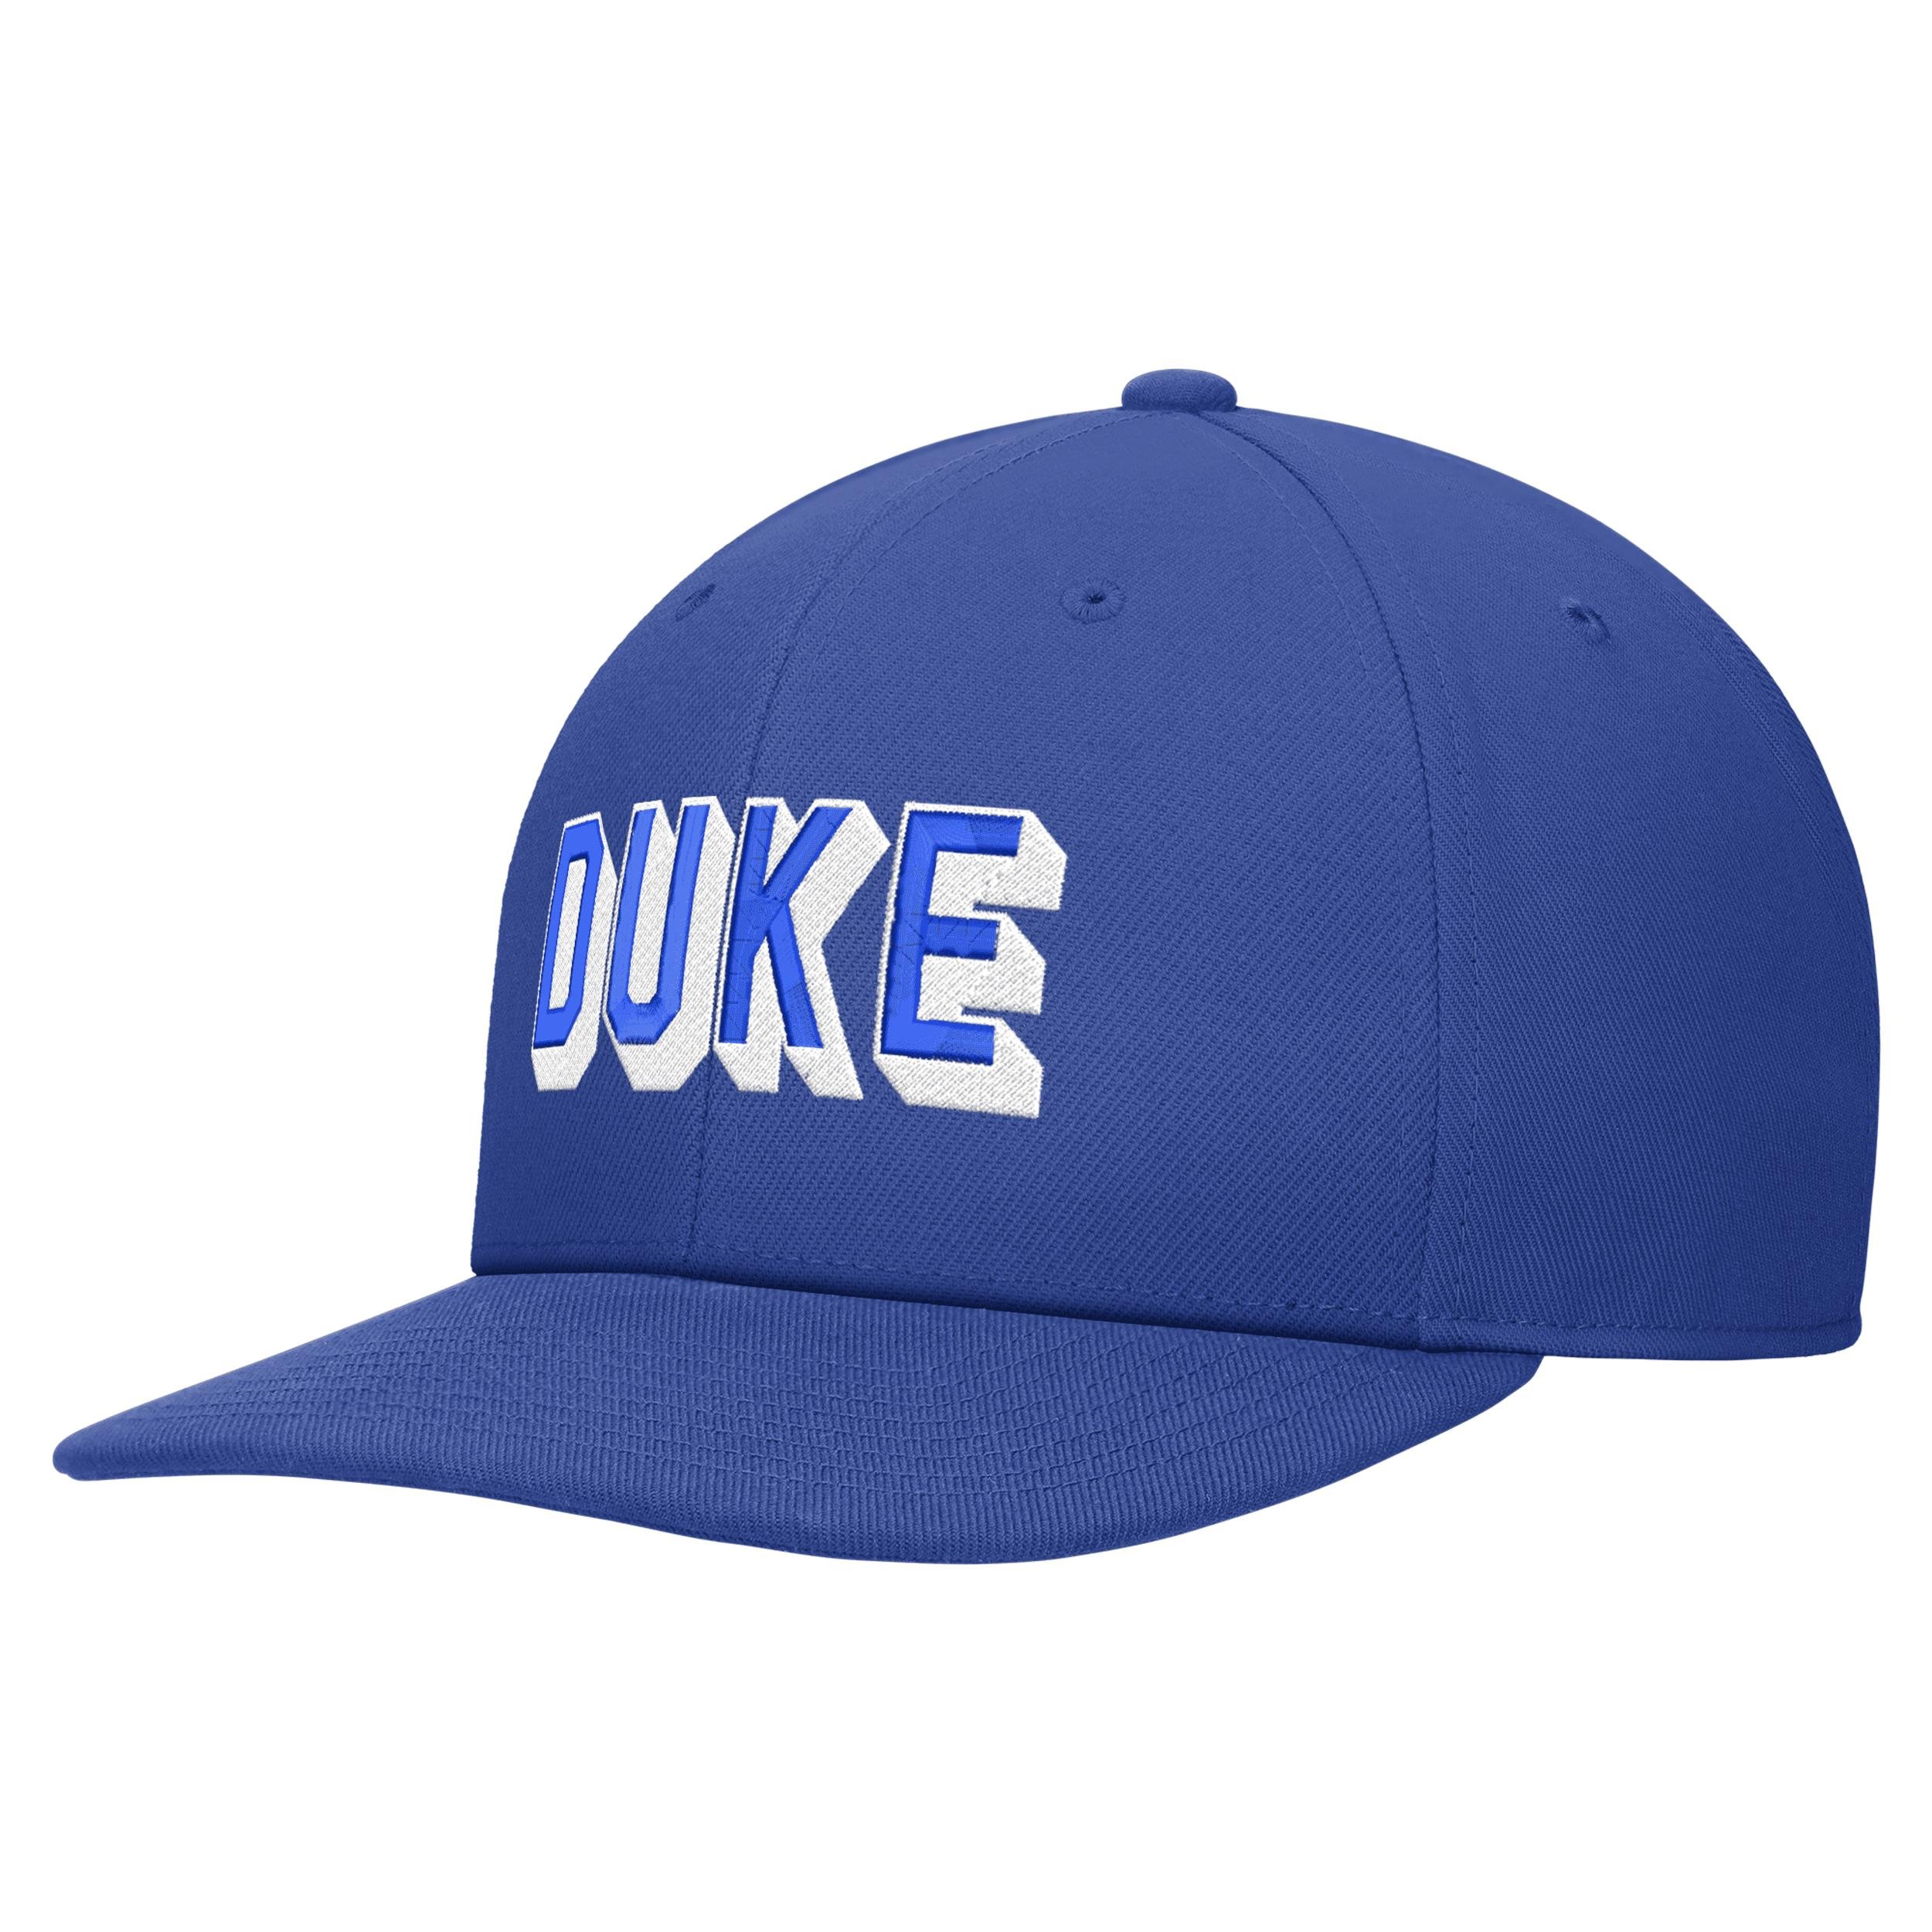 Duke Nike Unisex College Snapback Hat by NIKE